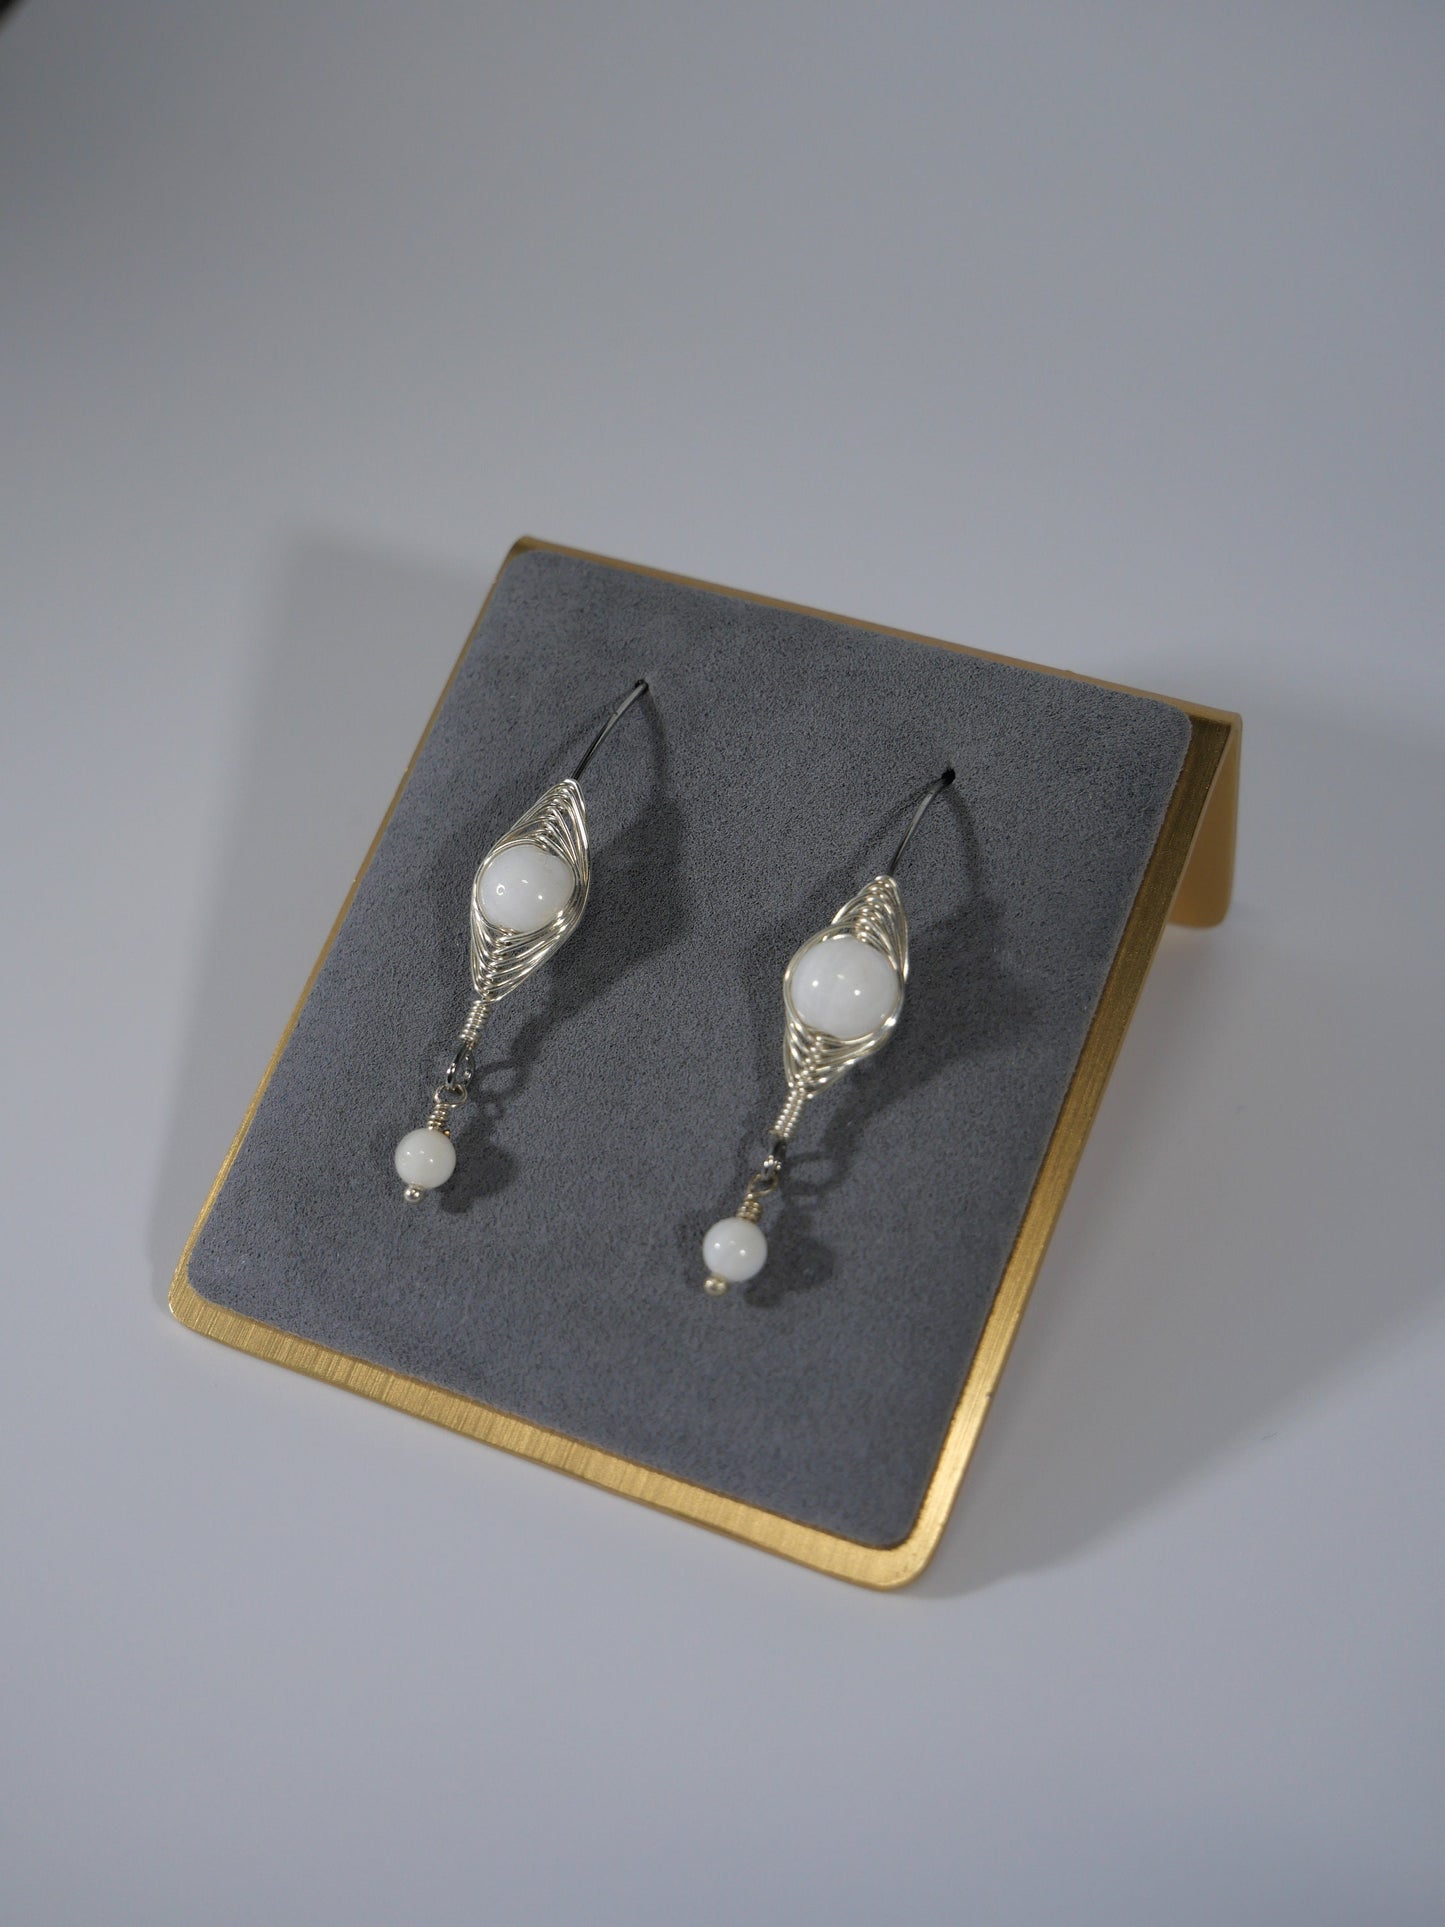 Dangle and Drop Earrings, Silver & Glass Bead Wire wrapped Earrings - Coastal Jewelry - Handmade in Maine